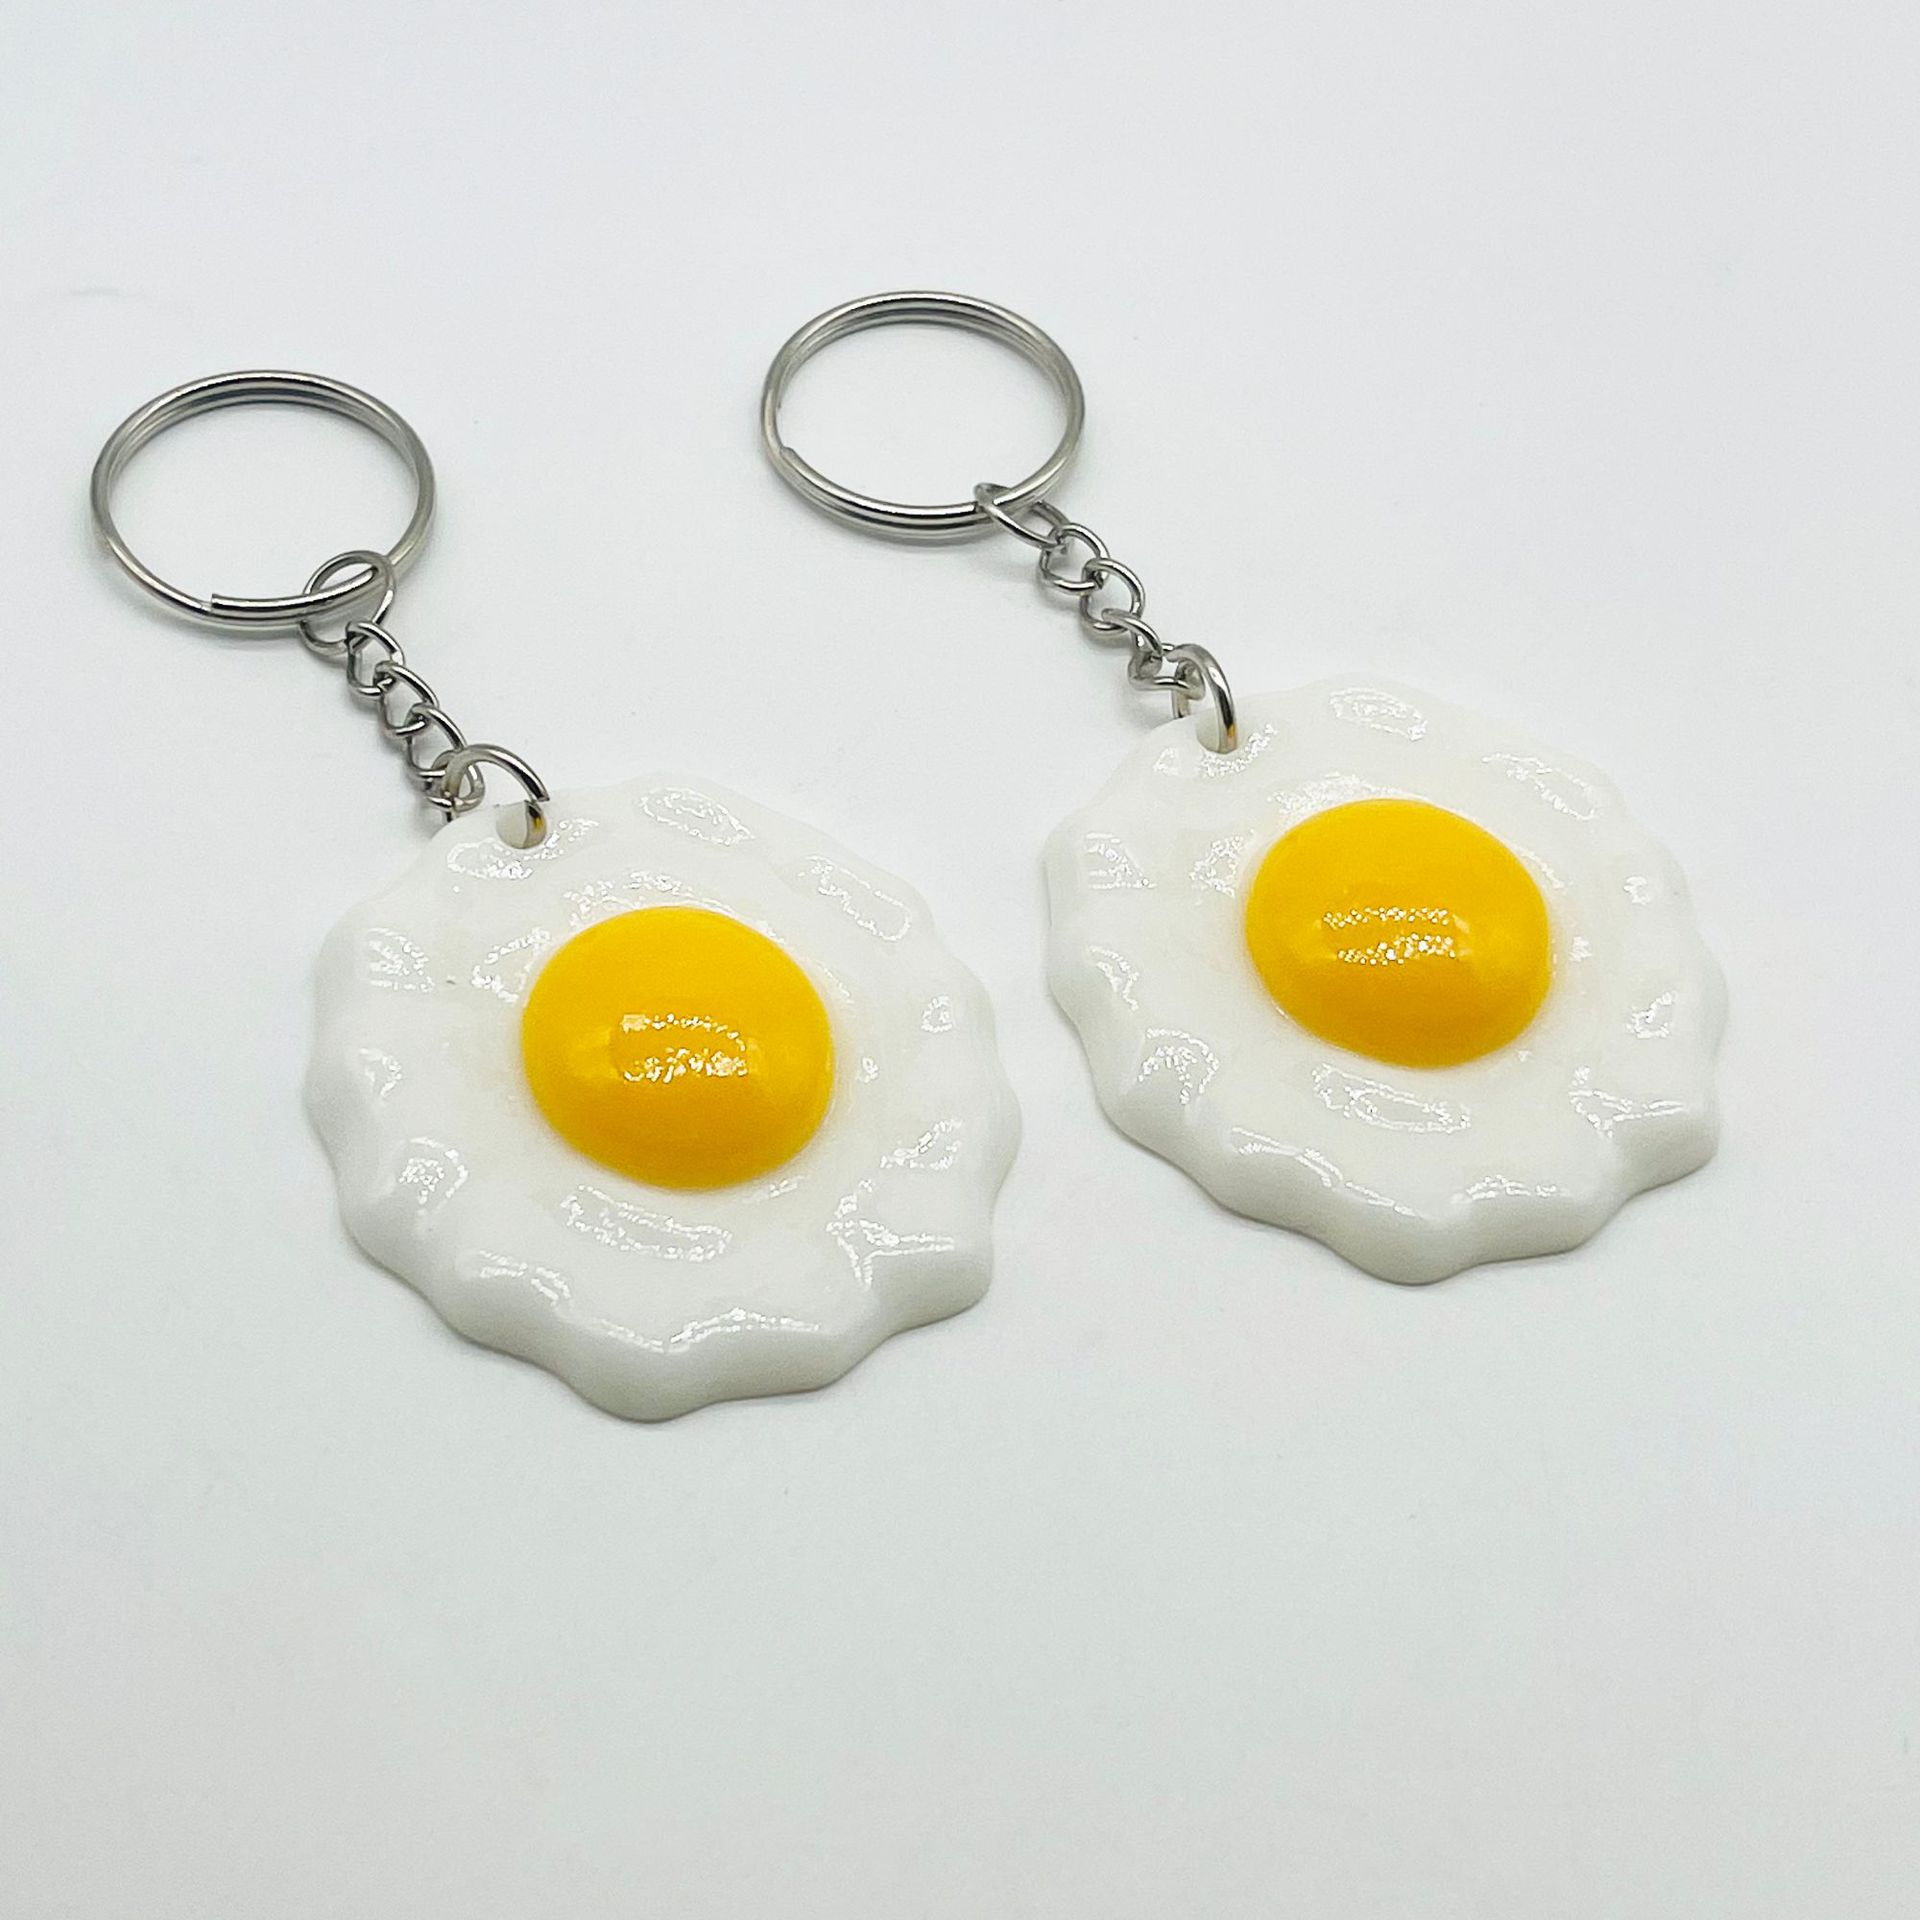 Simulated Fried Egg Key Chain 3d Fried Egg Key Chain Bag Pendant